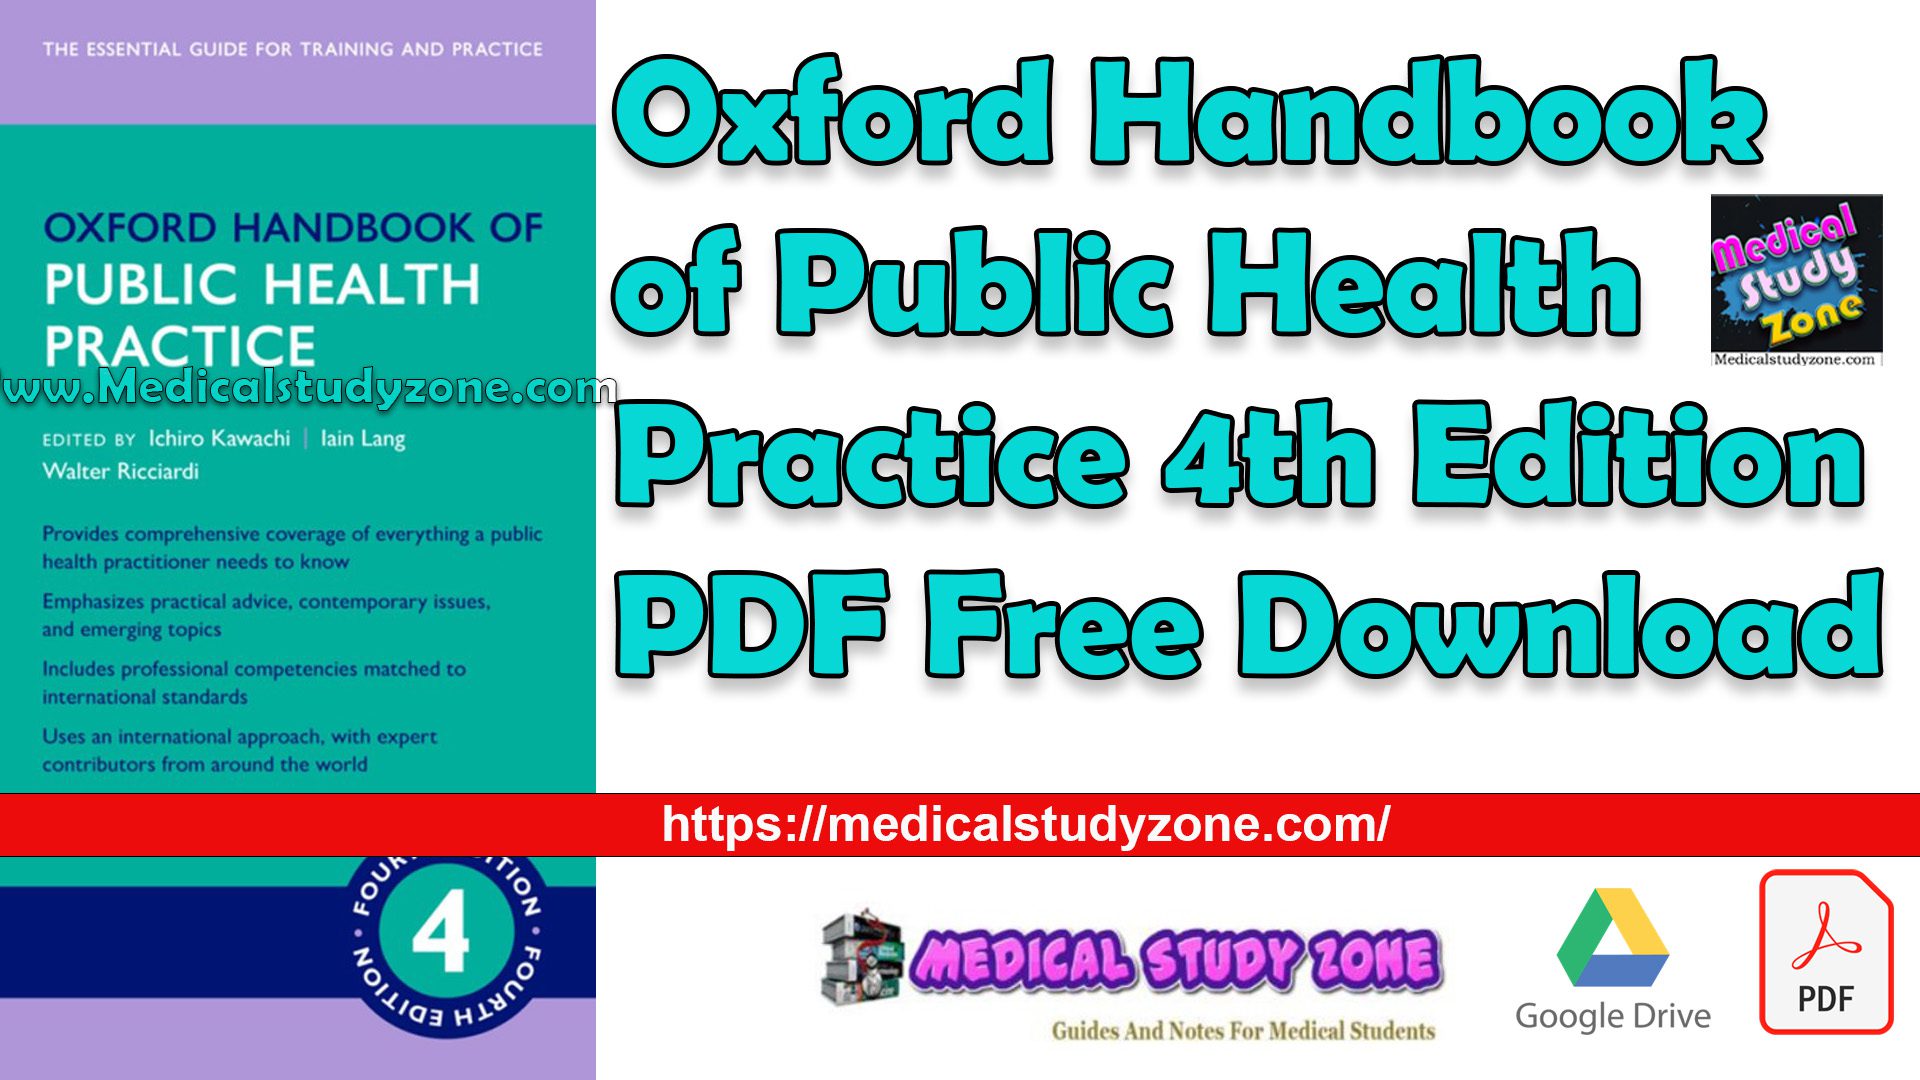 Oxford Handbook of Public Health Practice 4th Edition PDF Free Download